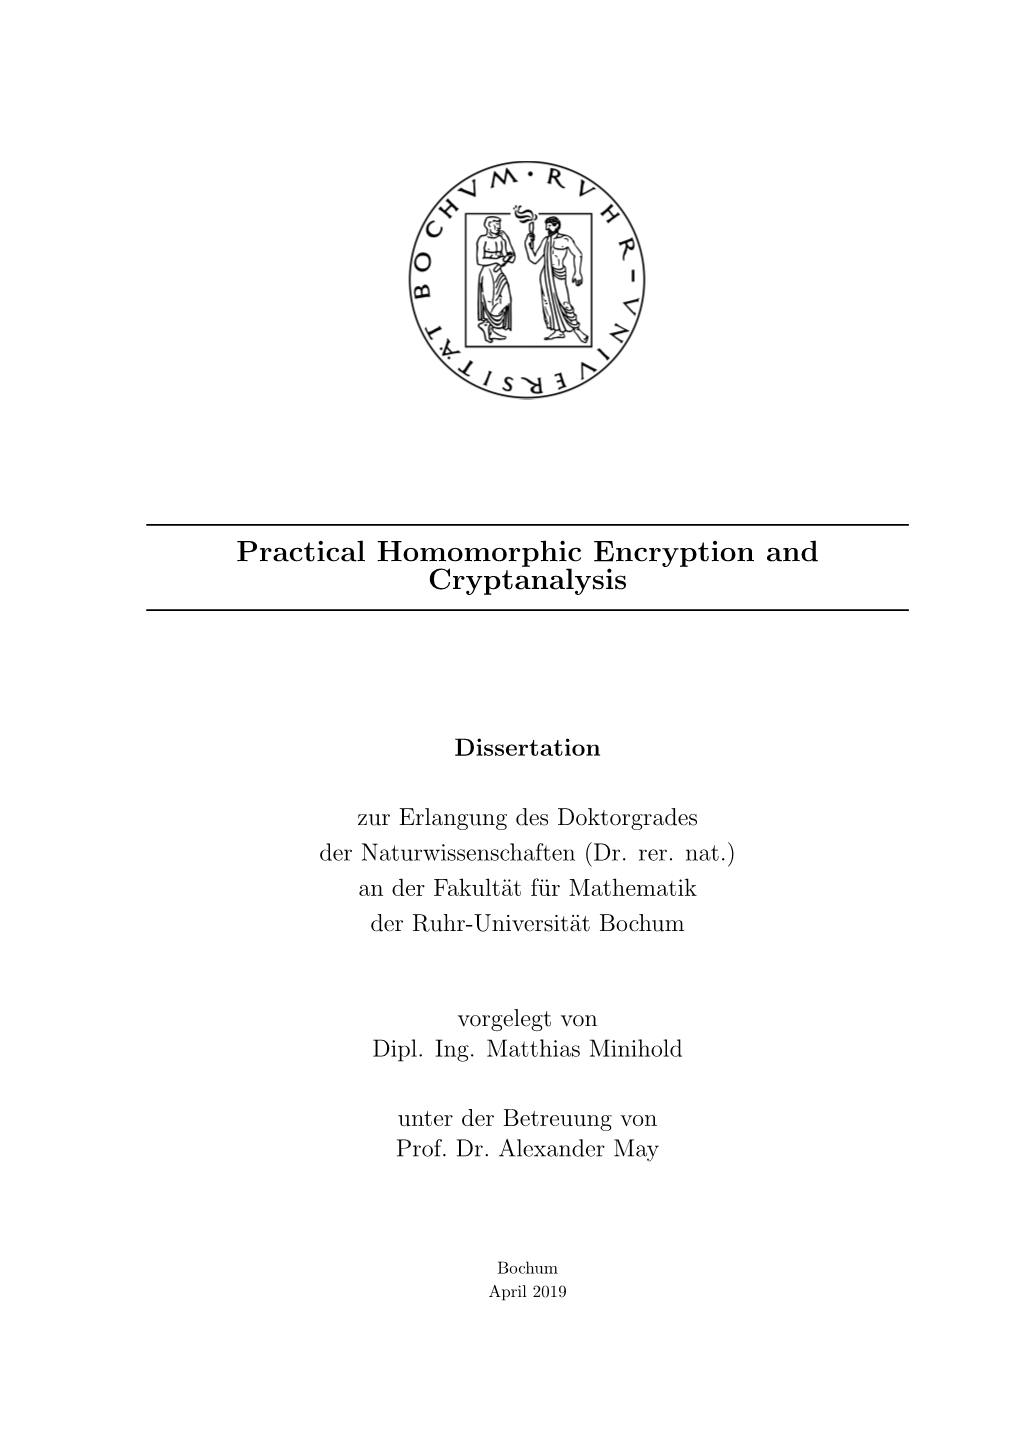 Practical Homomorphic Encryption and Cryptanalysis